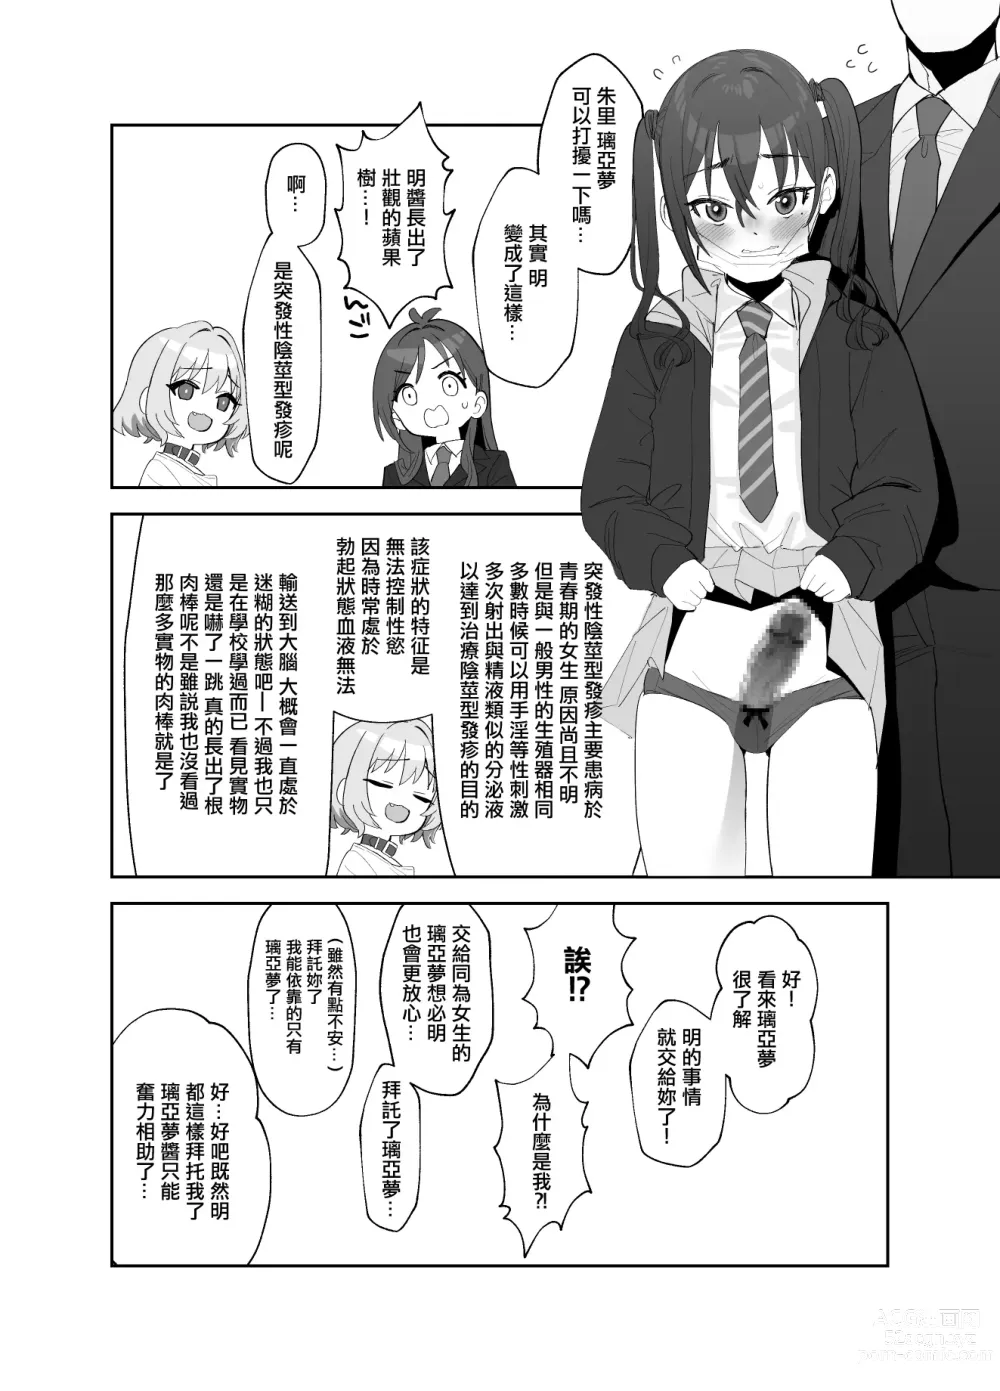 Page 2 of doujinshi 明長出了肉棒與璃亞夢做愛的漫畫